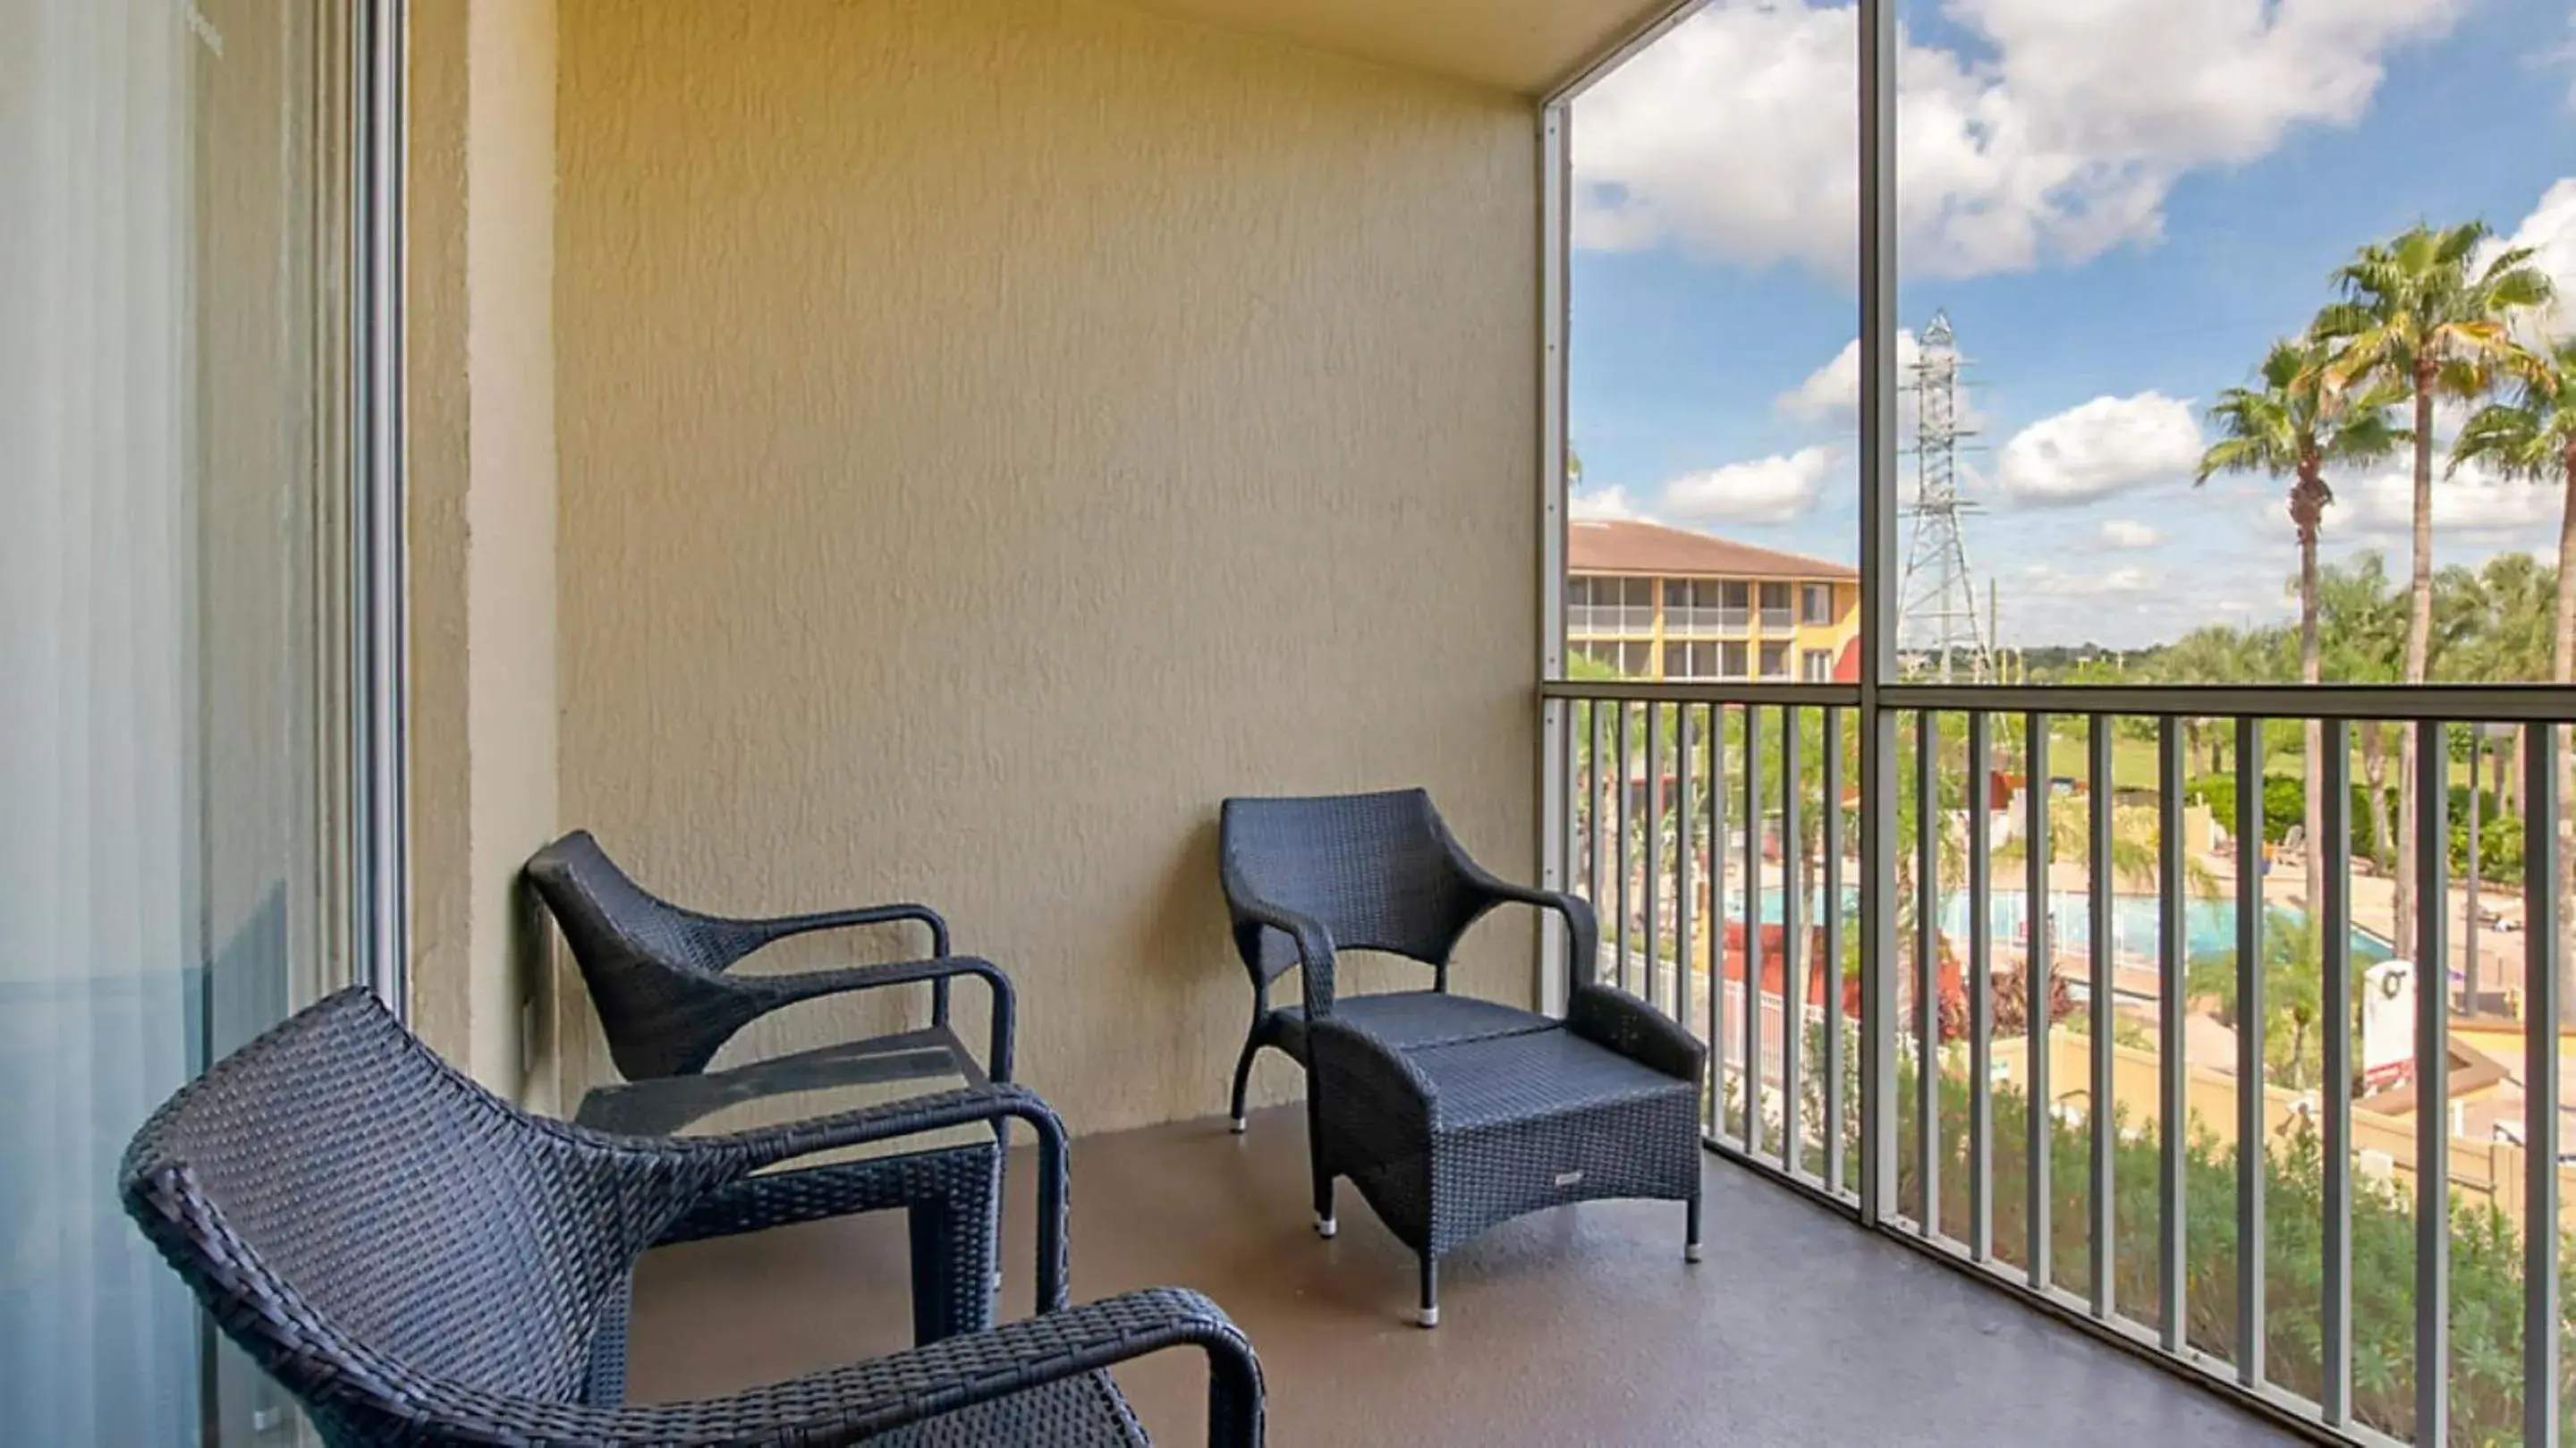 Balcony/Terrace, Seating Area in Bluegreen Vacations Orlando's Sunshine Resort